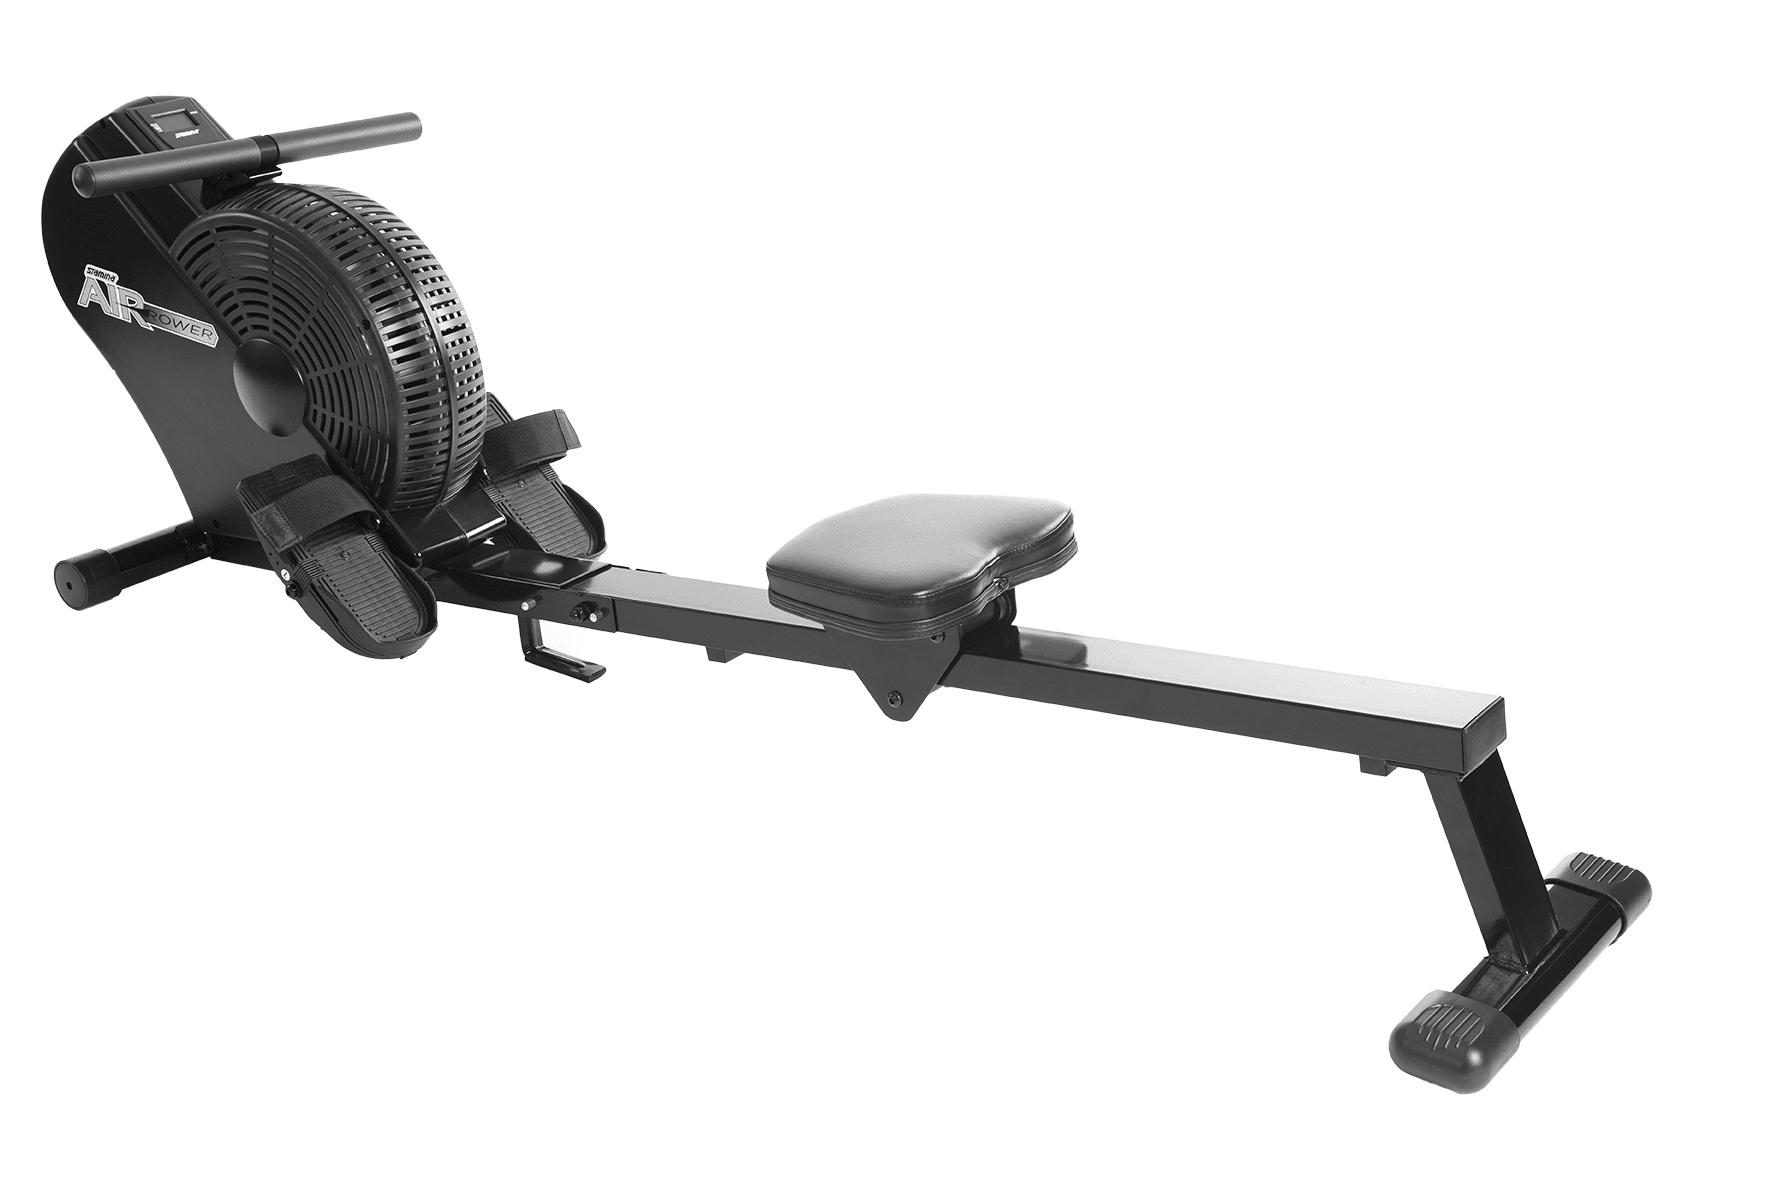 Titanium Strength Air Rowing Machine